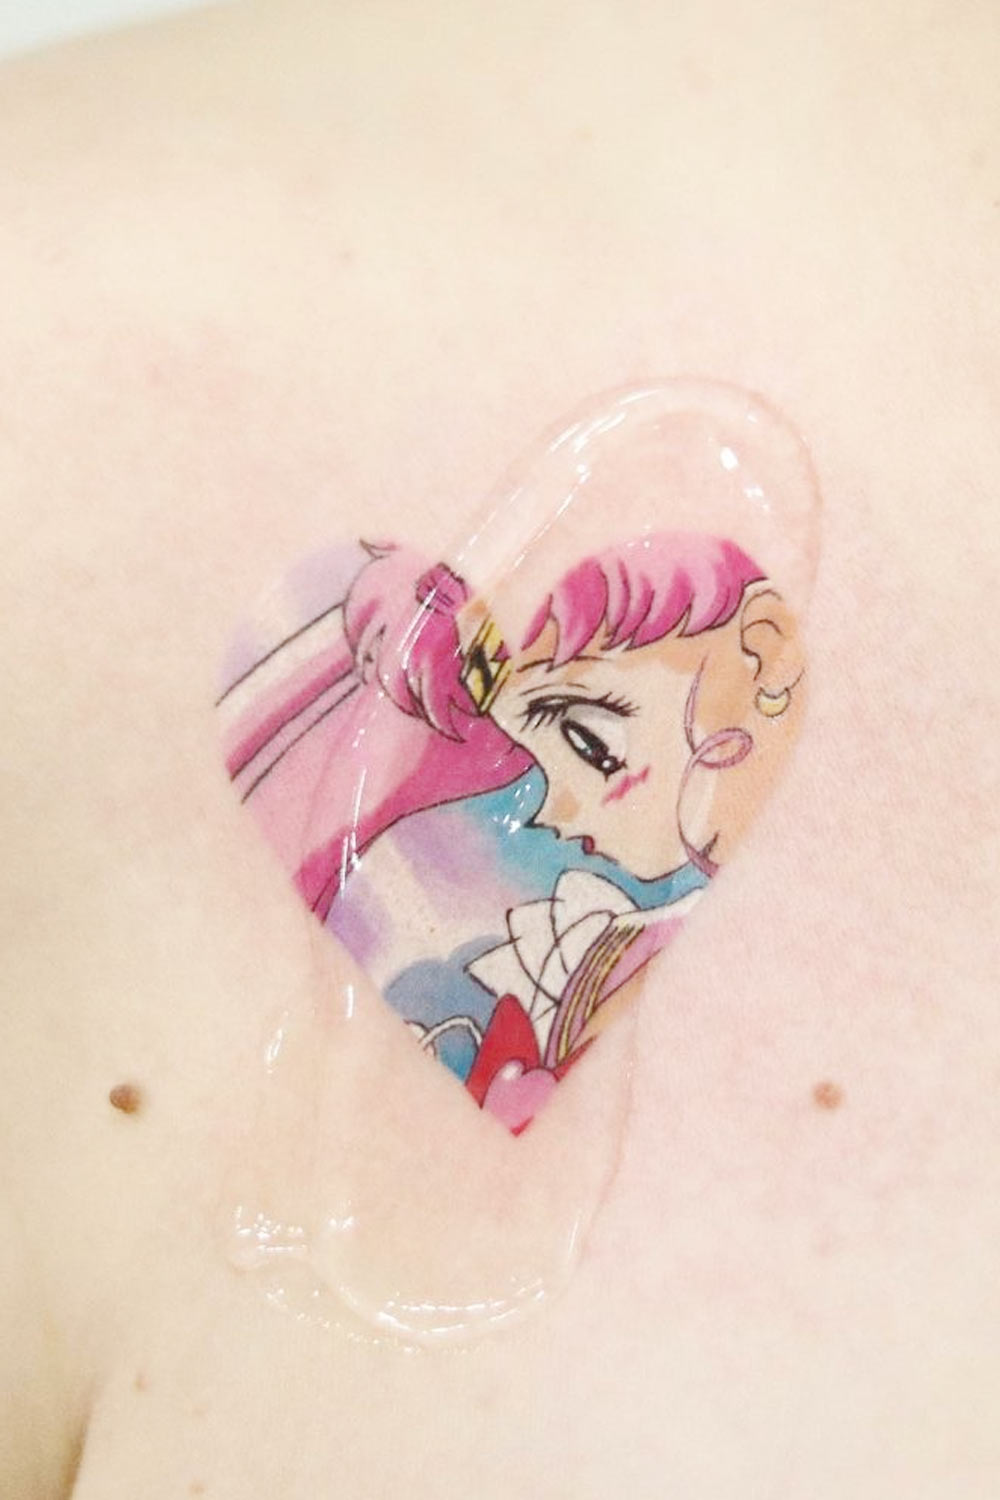 Small Heart Sailor Moon Theme Tattoo